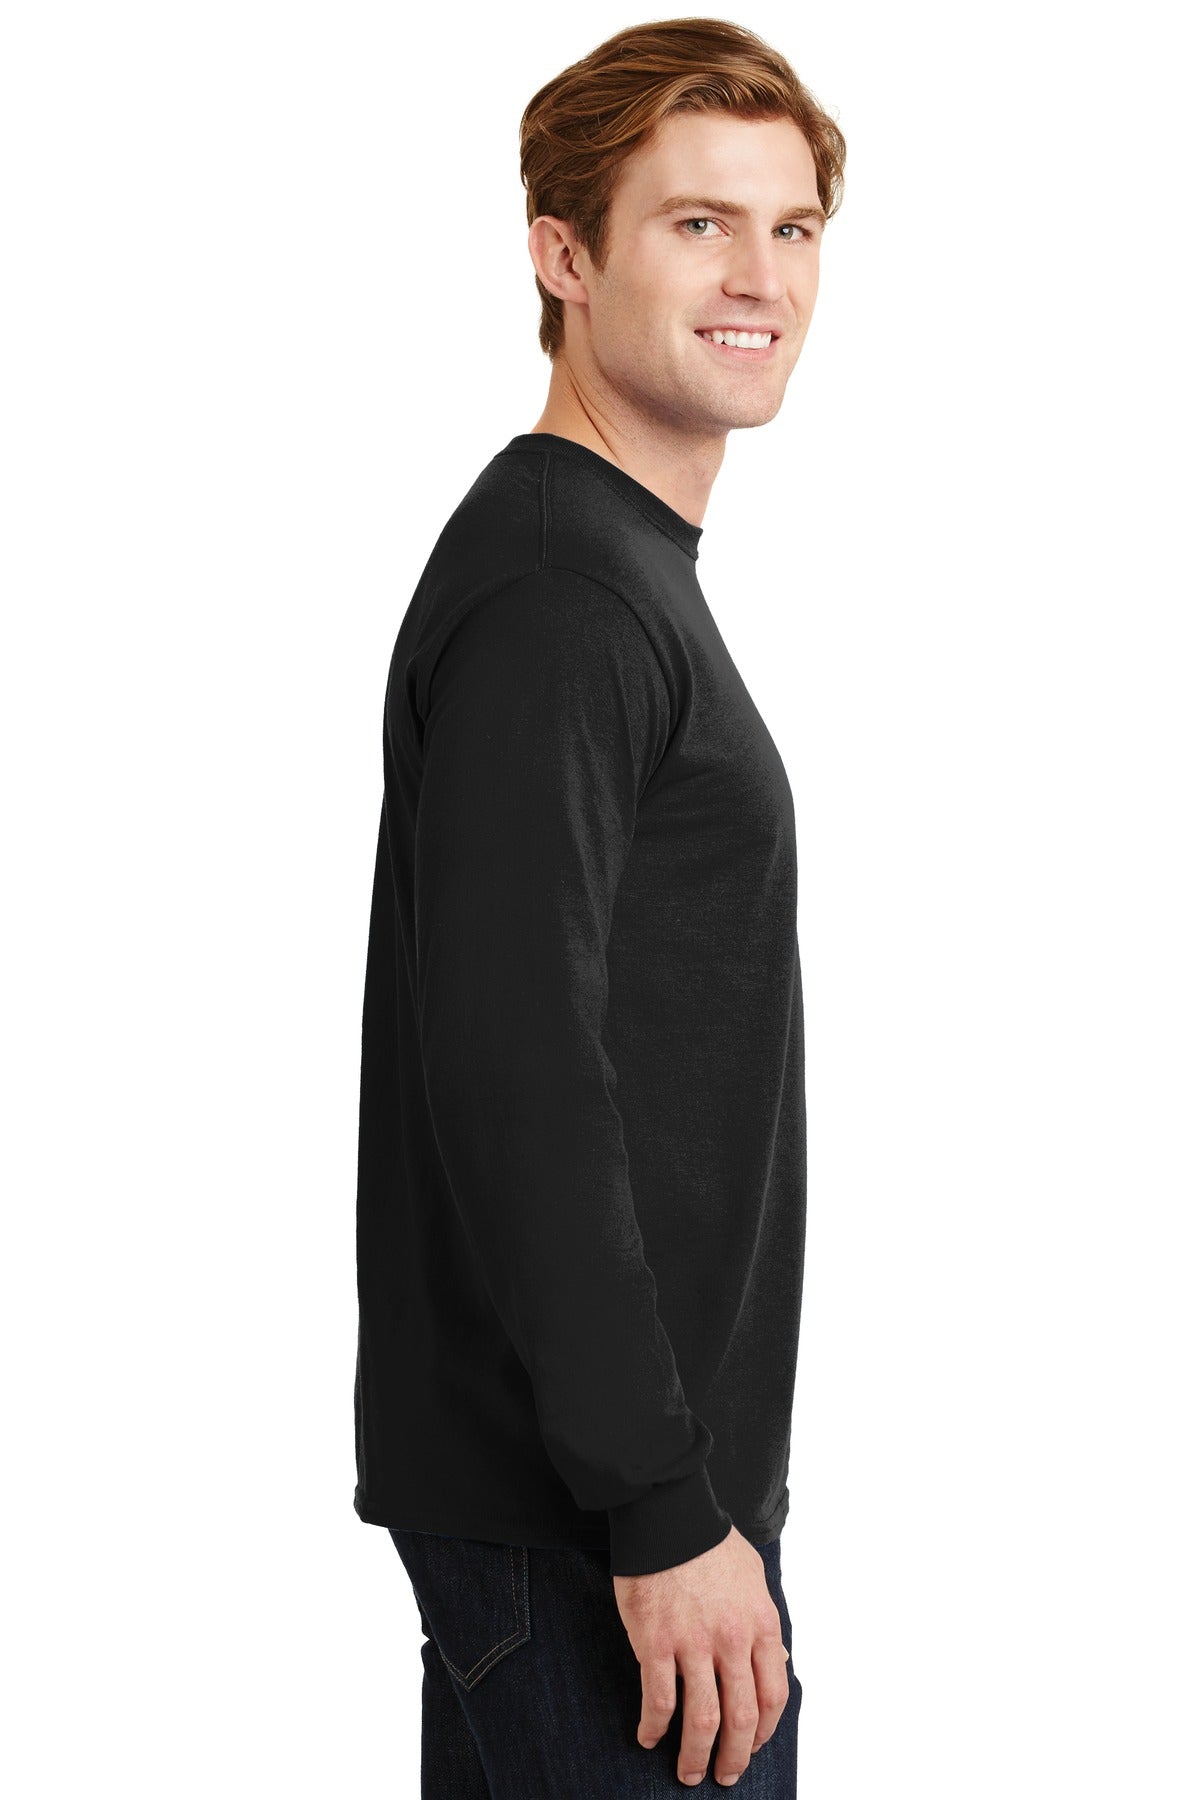 Gildan® - DryBlend® 50 Cotton/50 Poly Long Sleeve T-Shirt. 8400 [Black] - DFW Impression